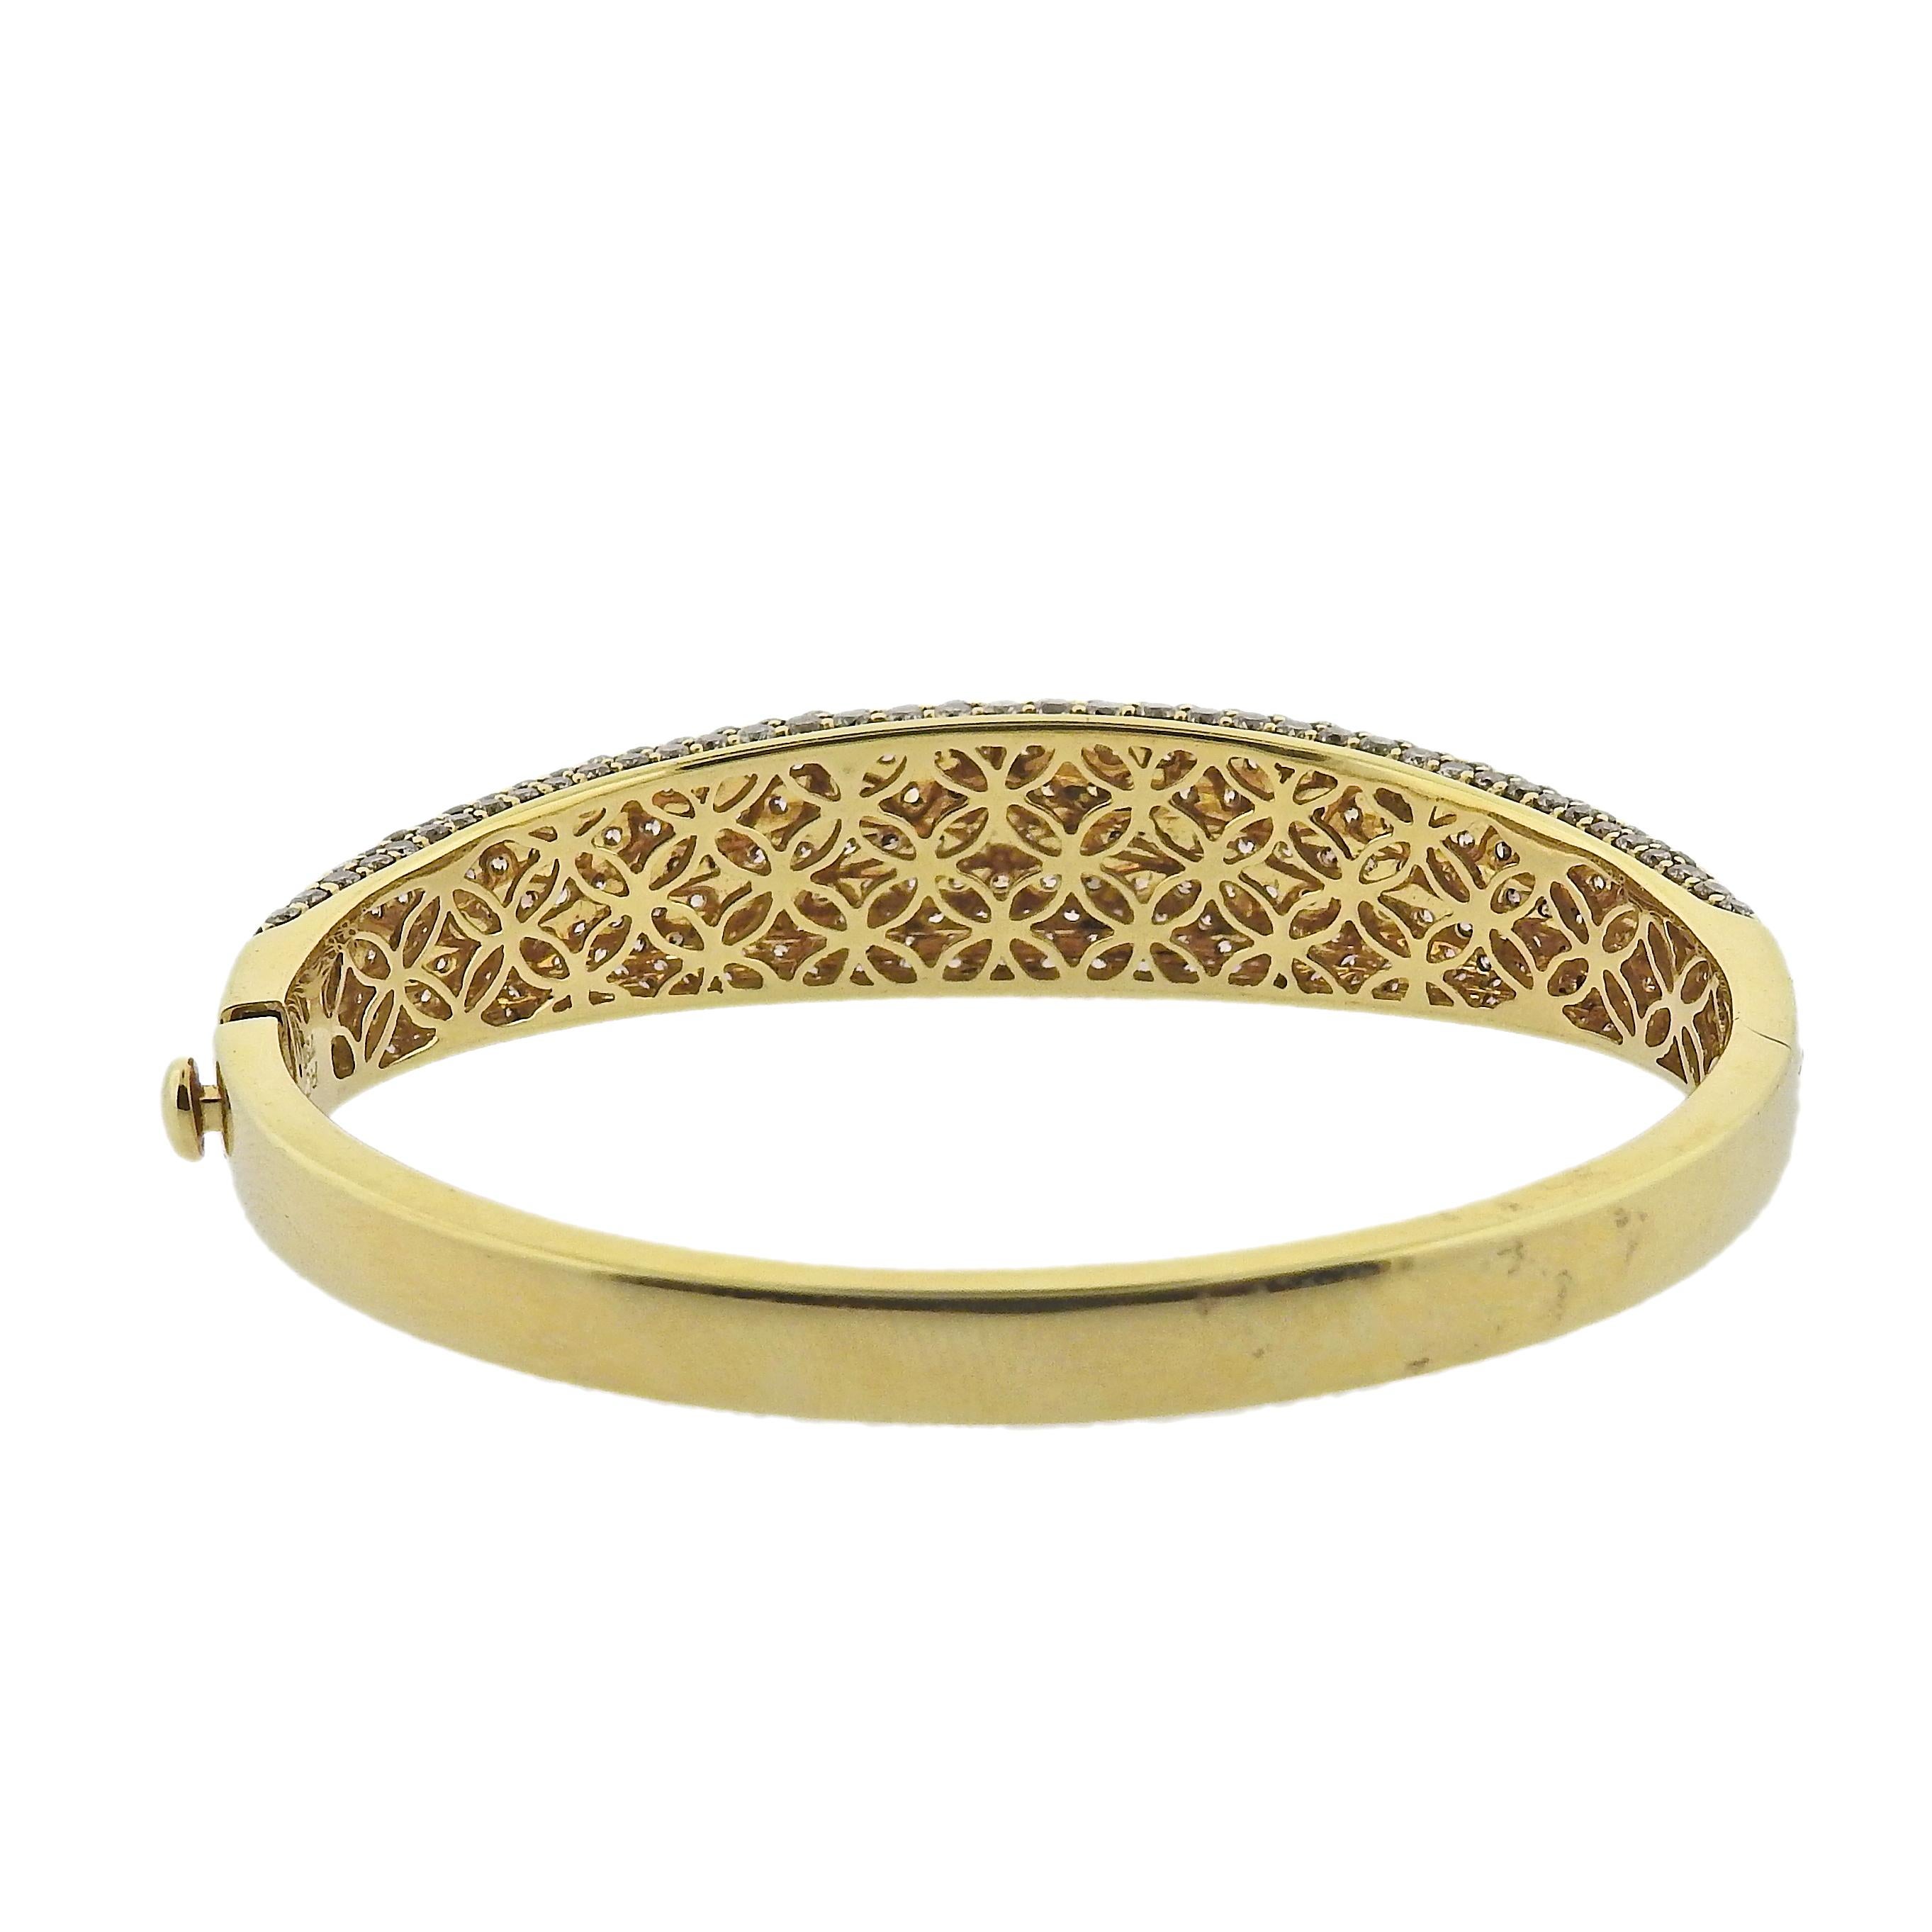 Roberto Coin Fantasia 11.35ctw Fancy Diamond Flower Gold Bangle Bracelet. Bracelet will fit approx. 7